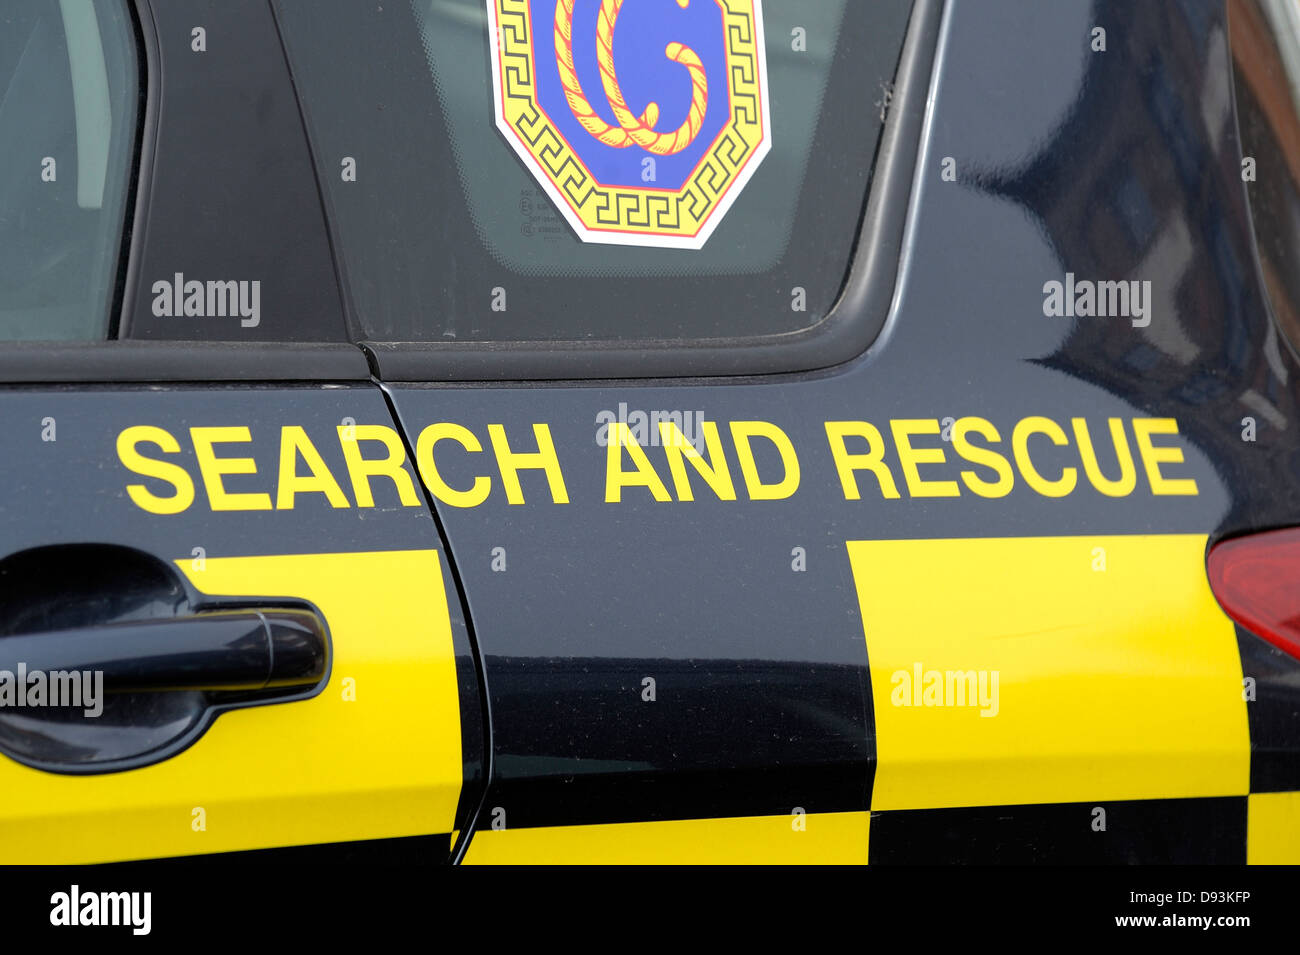 Coastguard Search and rescue Vehicle England UK Stock Photo